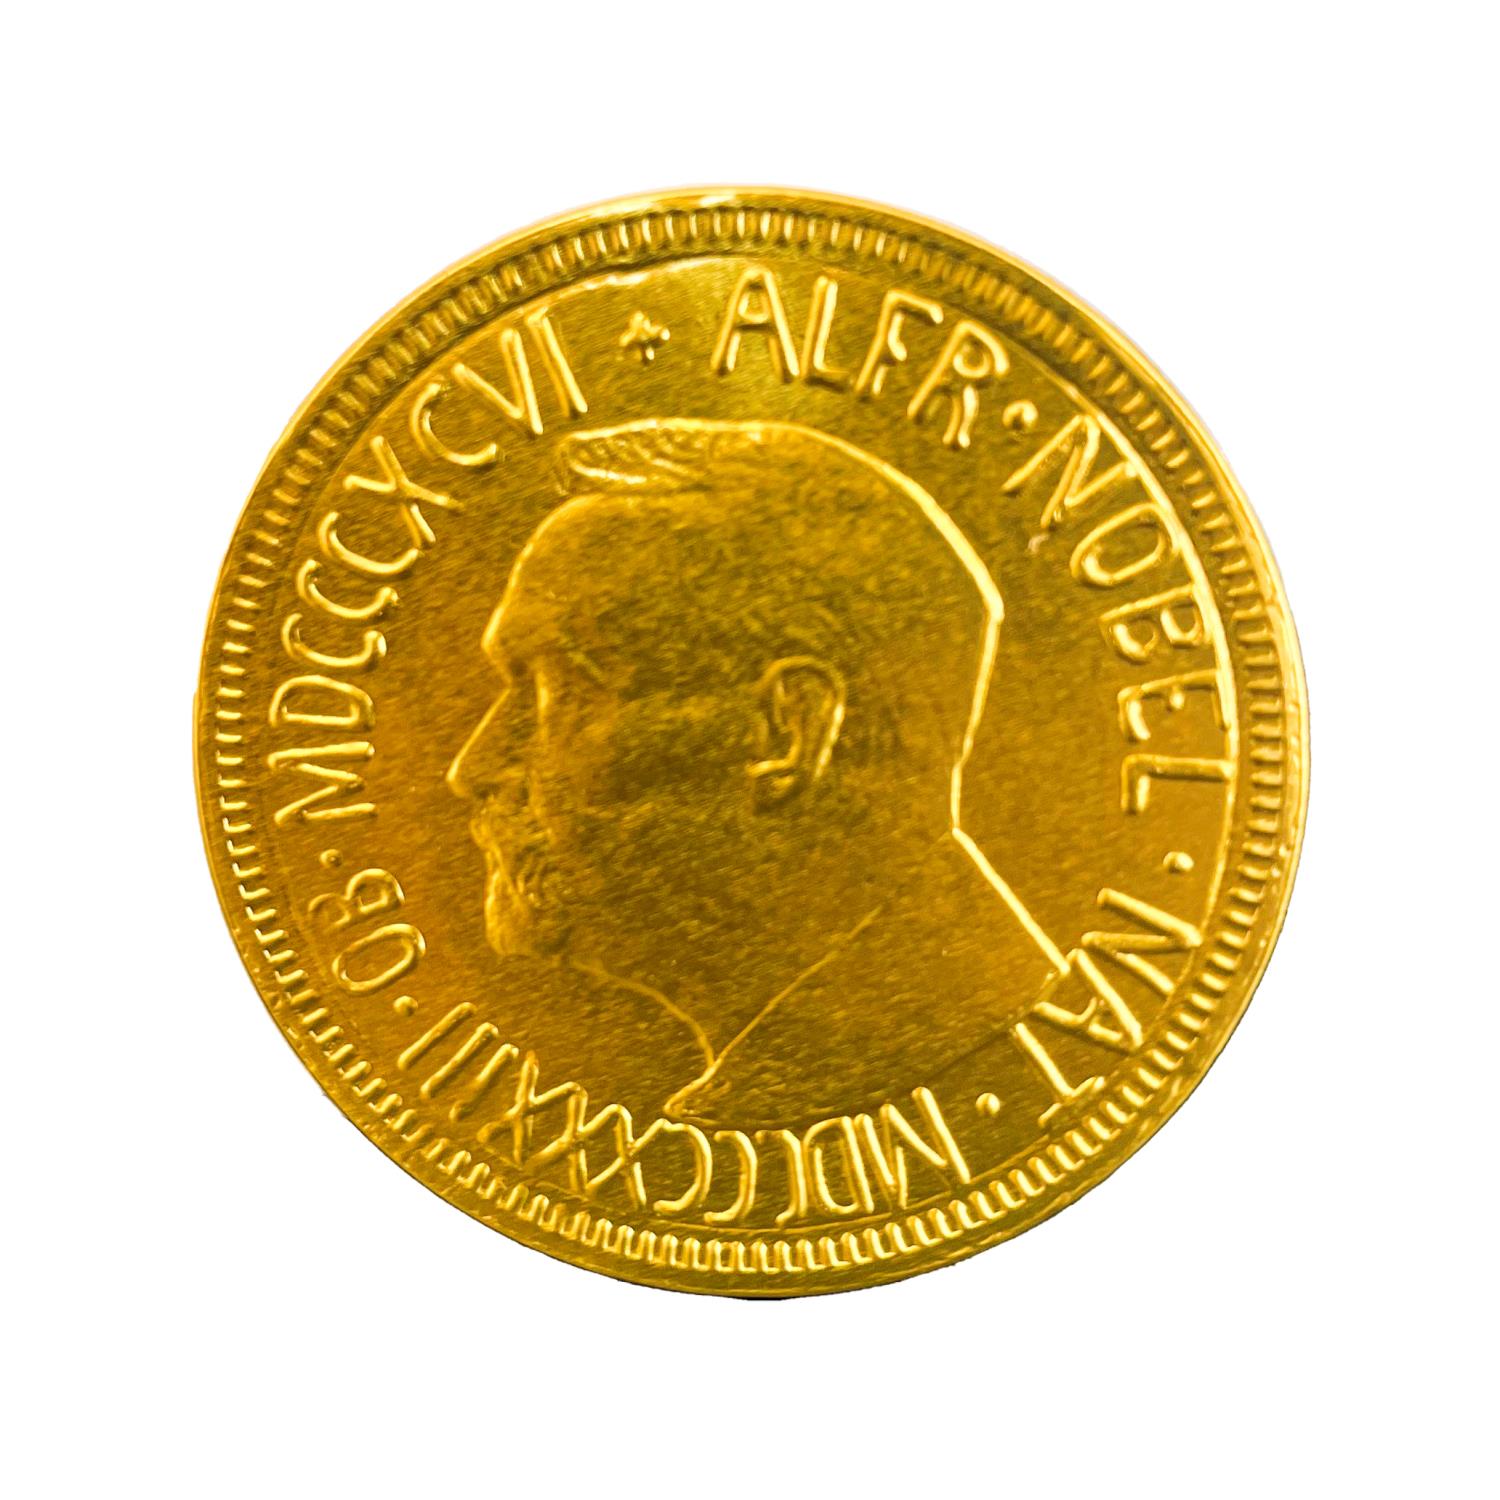 New Nobel Peace Chocolate Medal